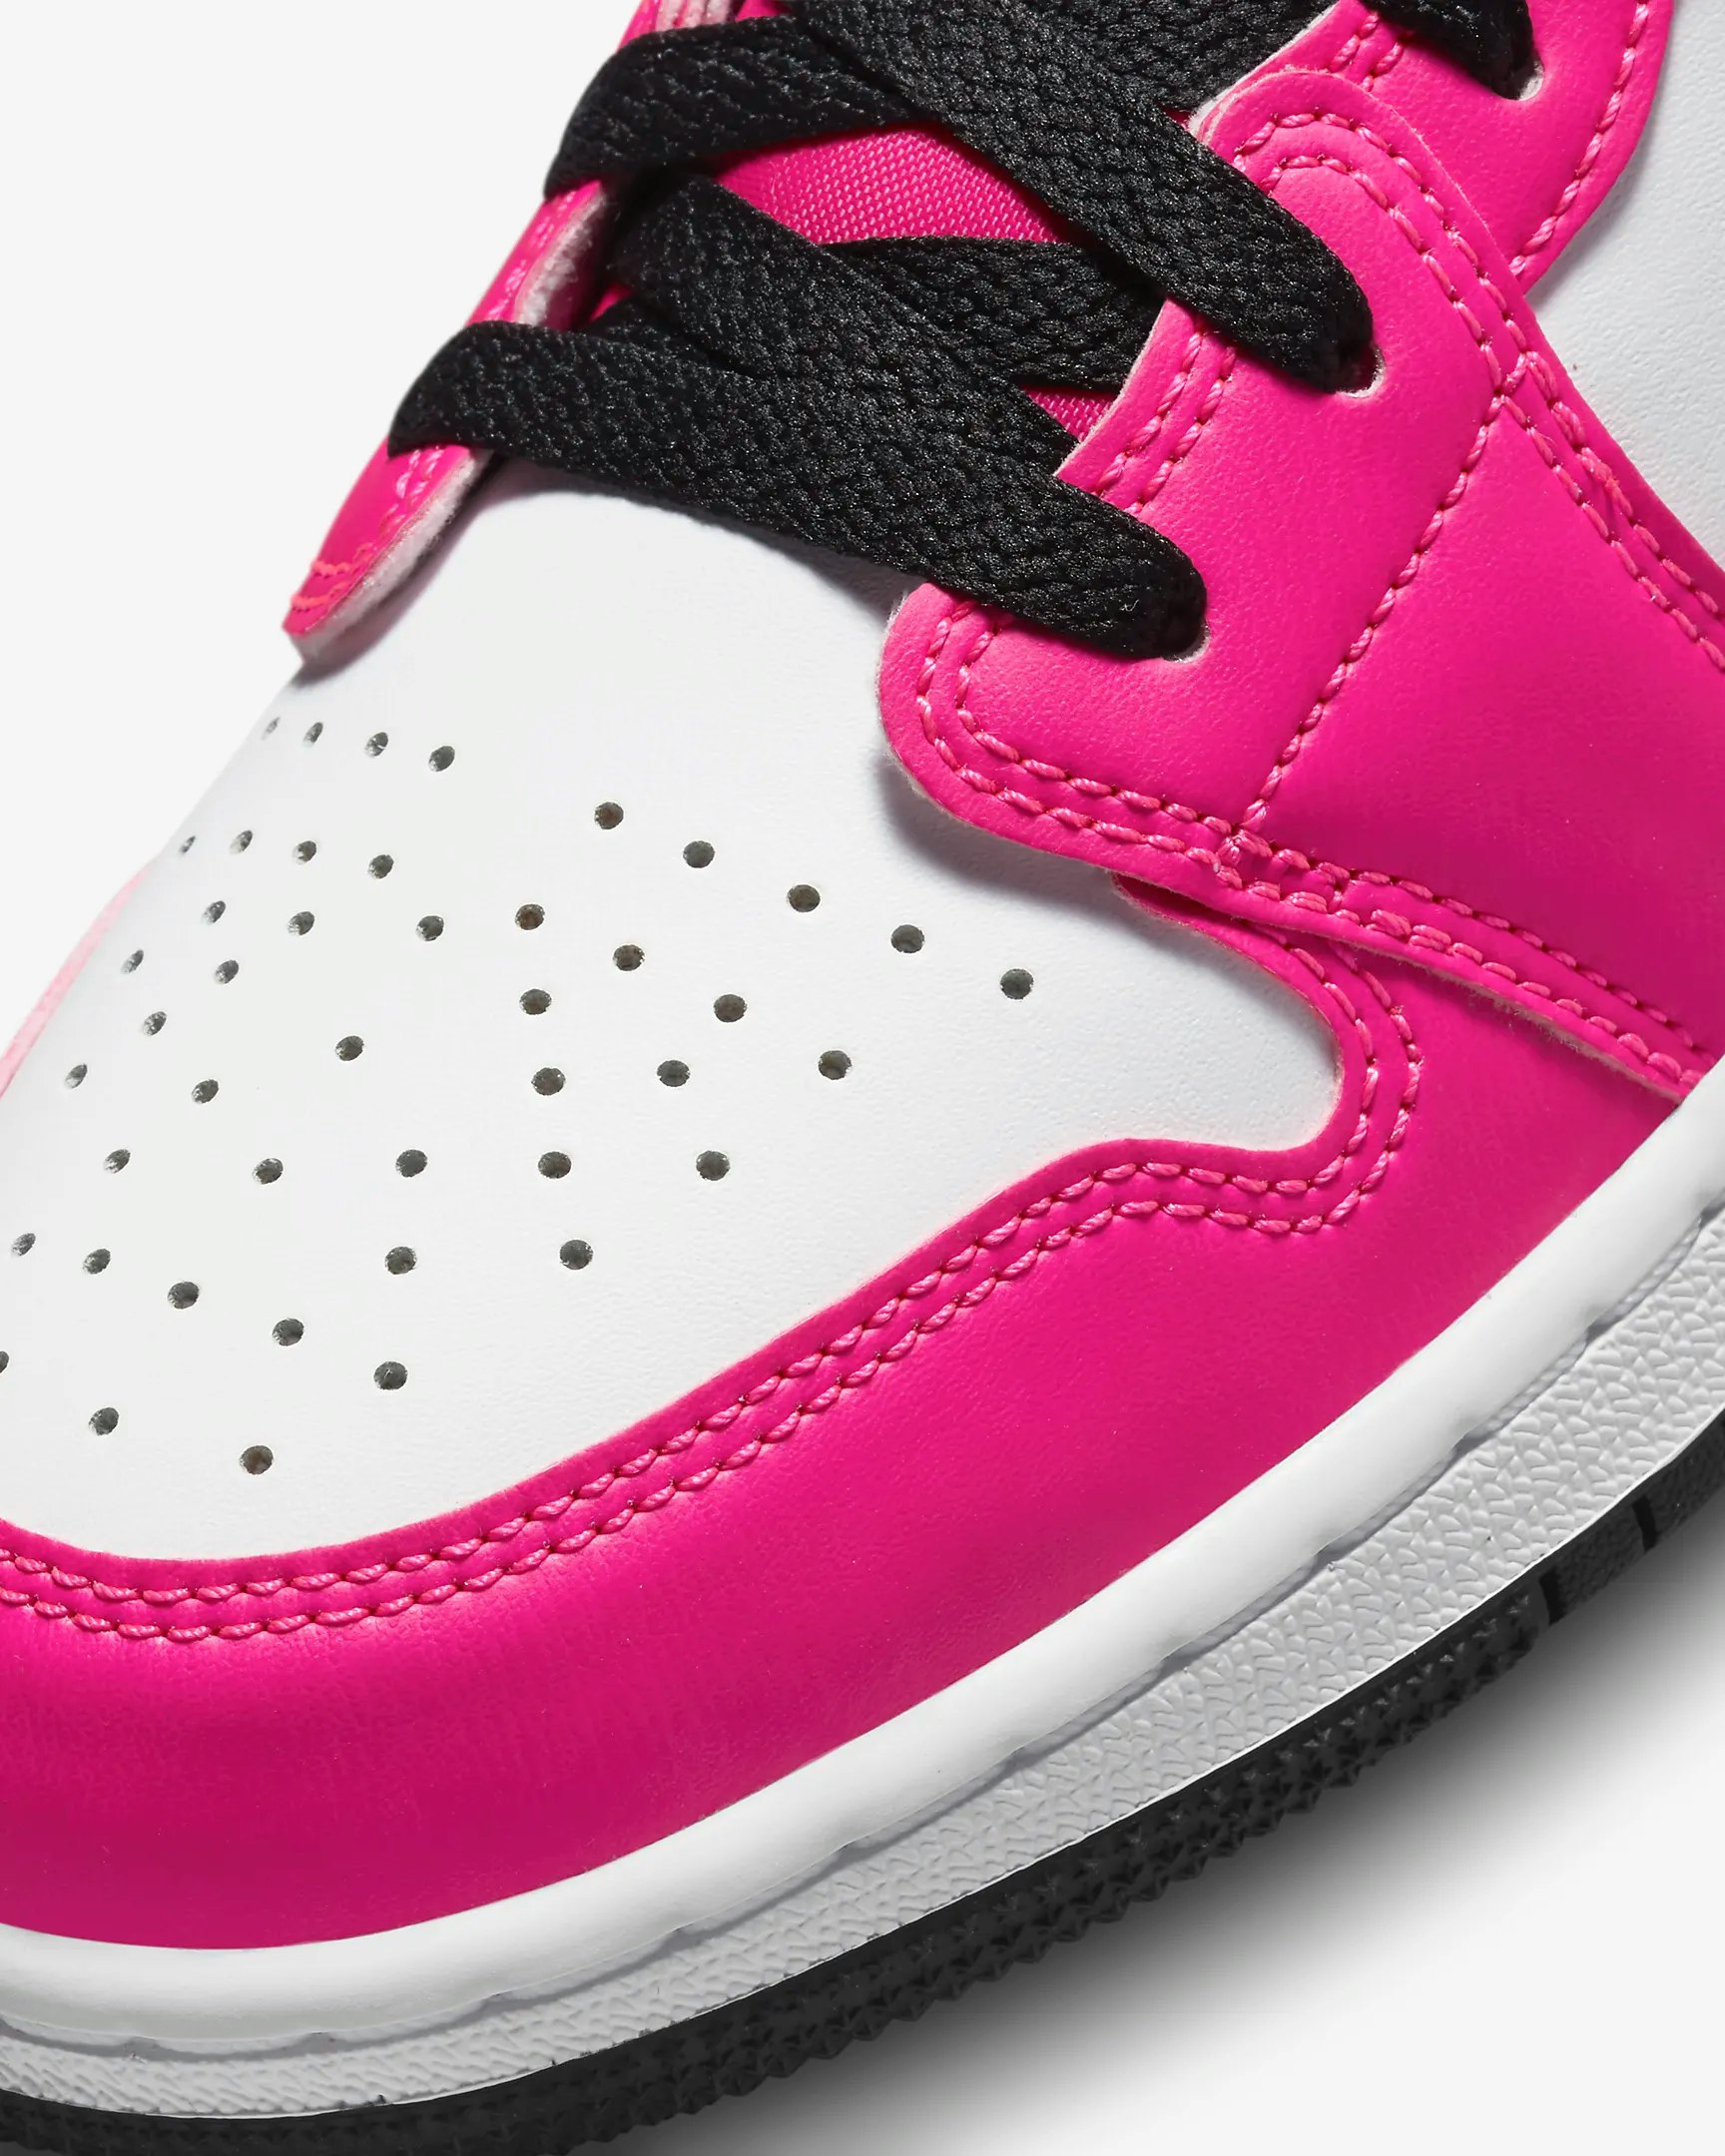 Air Jordan 1 Low GS "Fierce Pink"